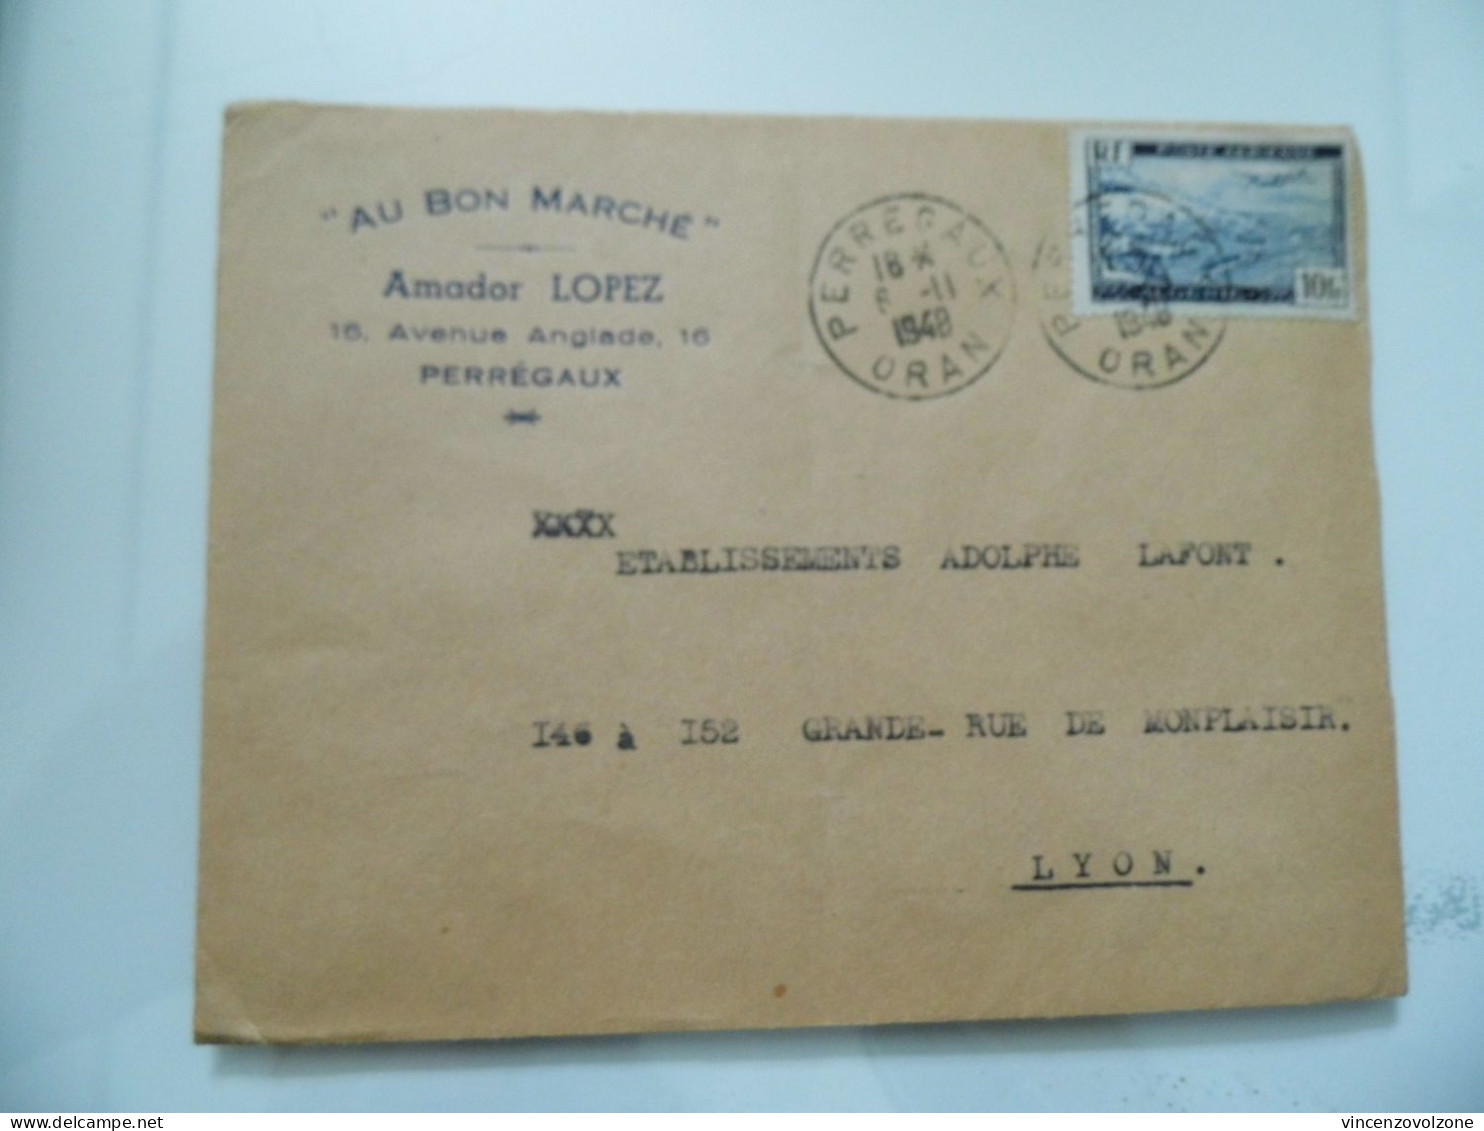 Busta Viaggiata Per La Francia Posta Aerea "AU BONNE MARCHE' Amador LOPEZ PERREGAUX" 1948 - Posta Aerea